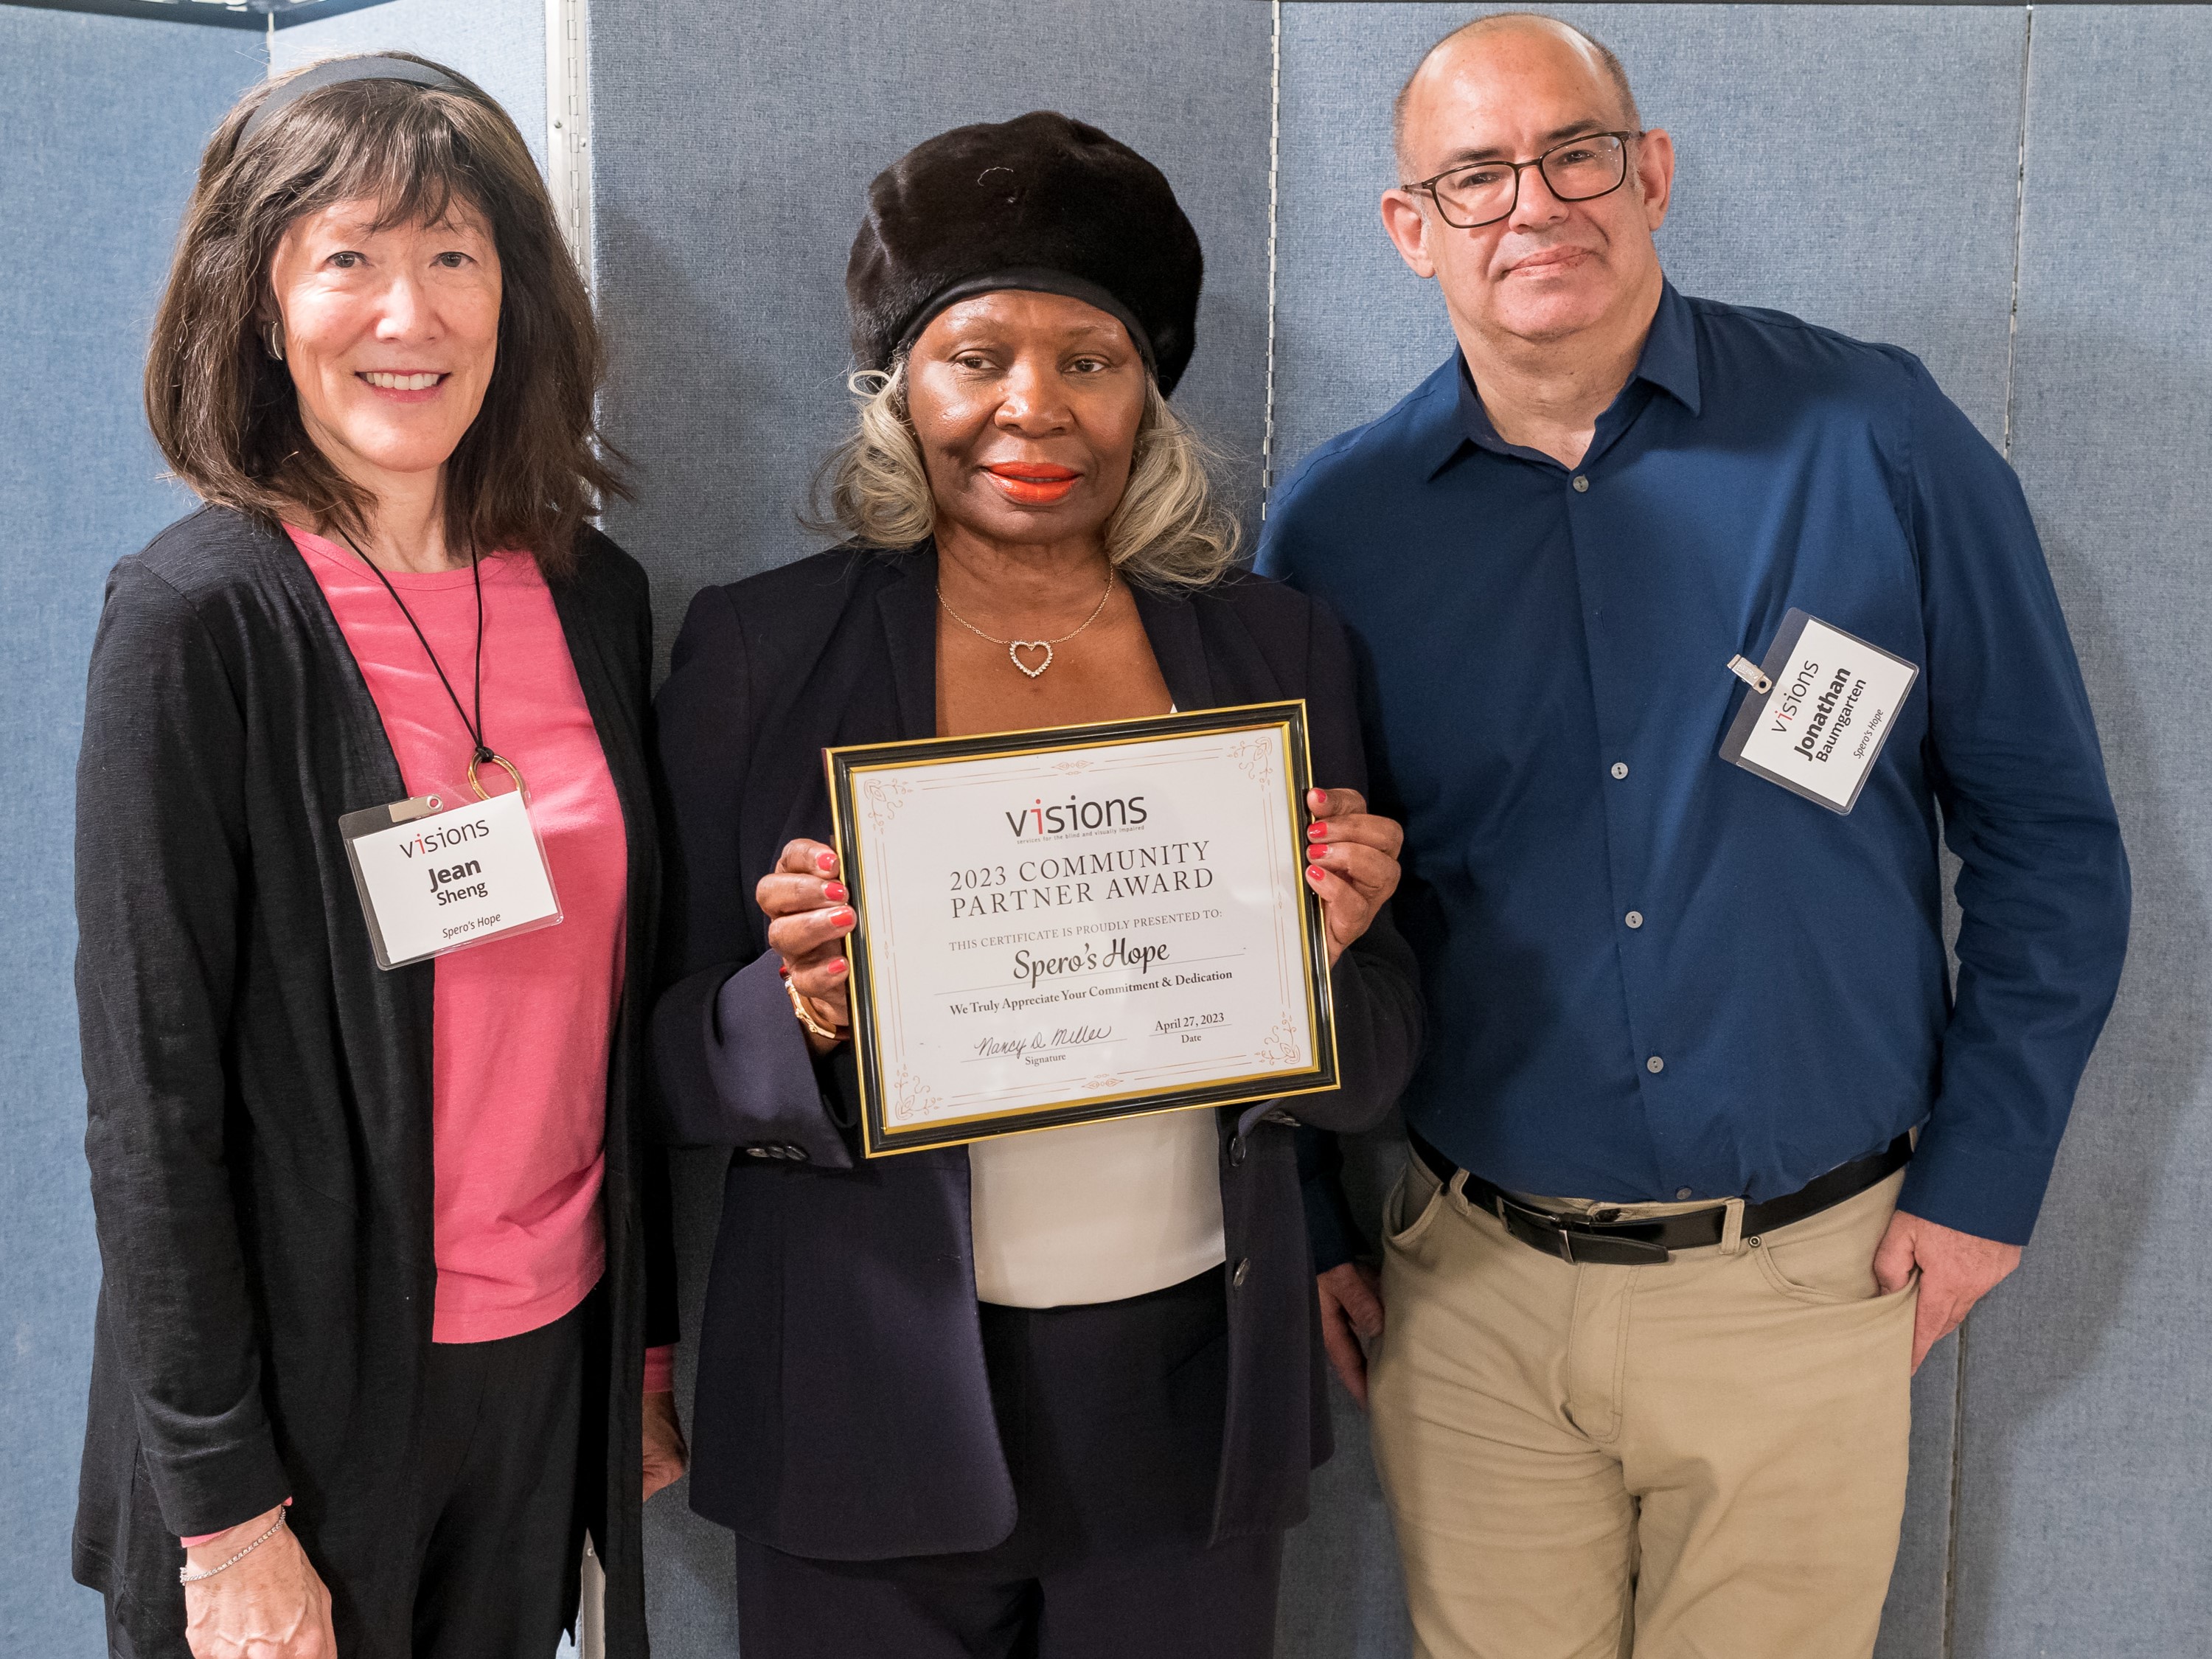 receiving The VISIONS Community Partner Award